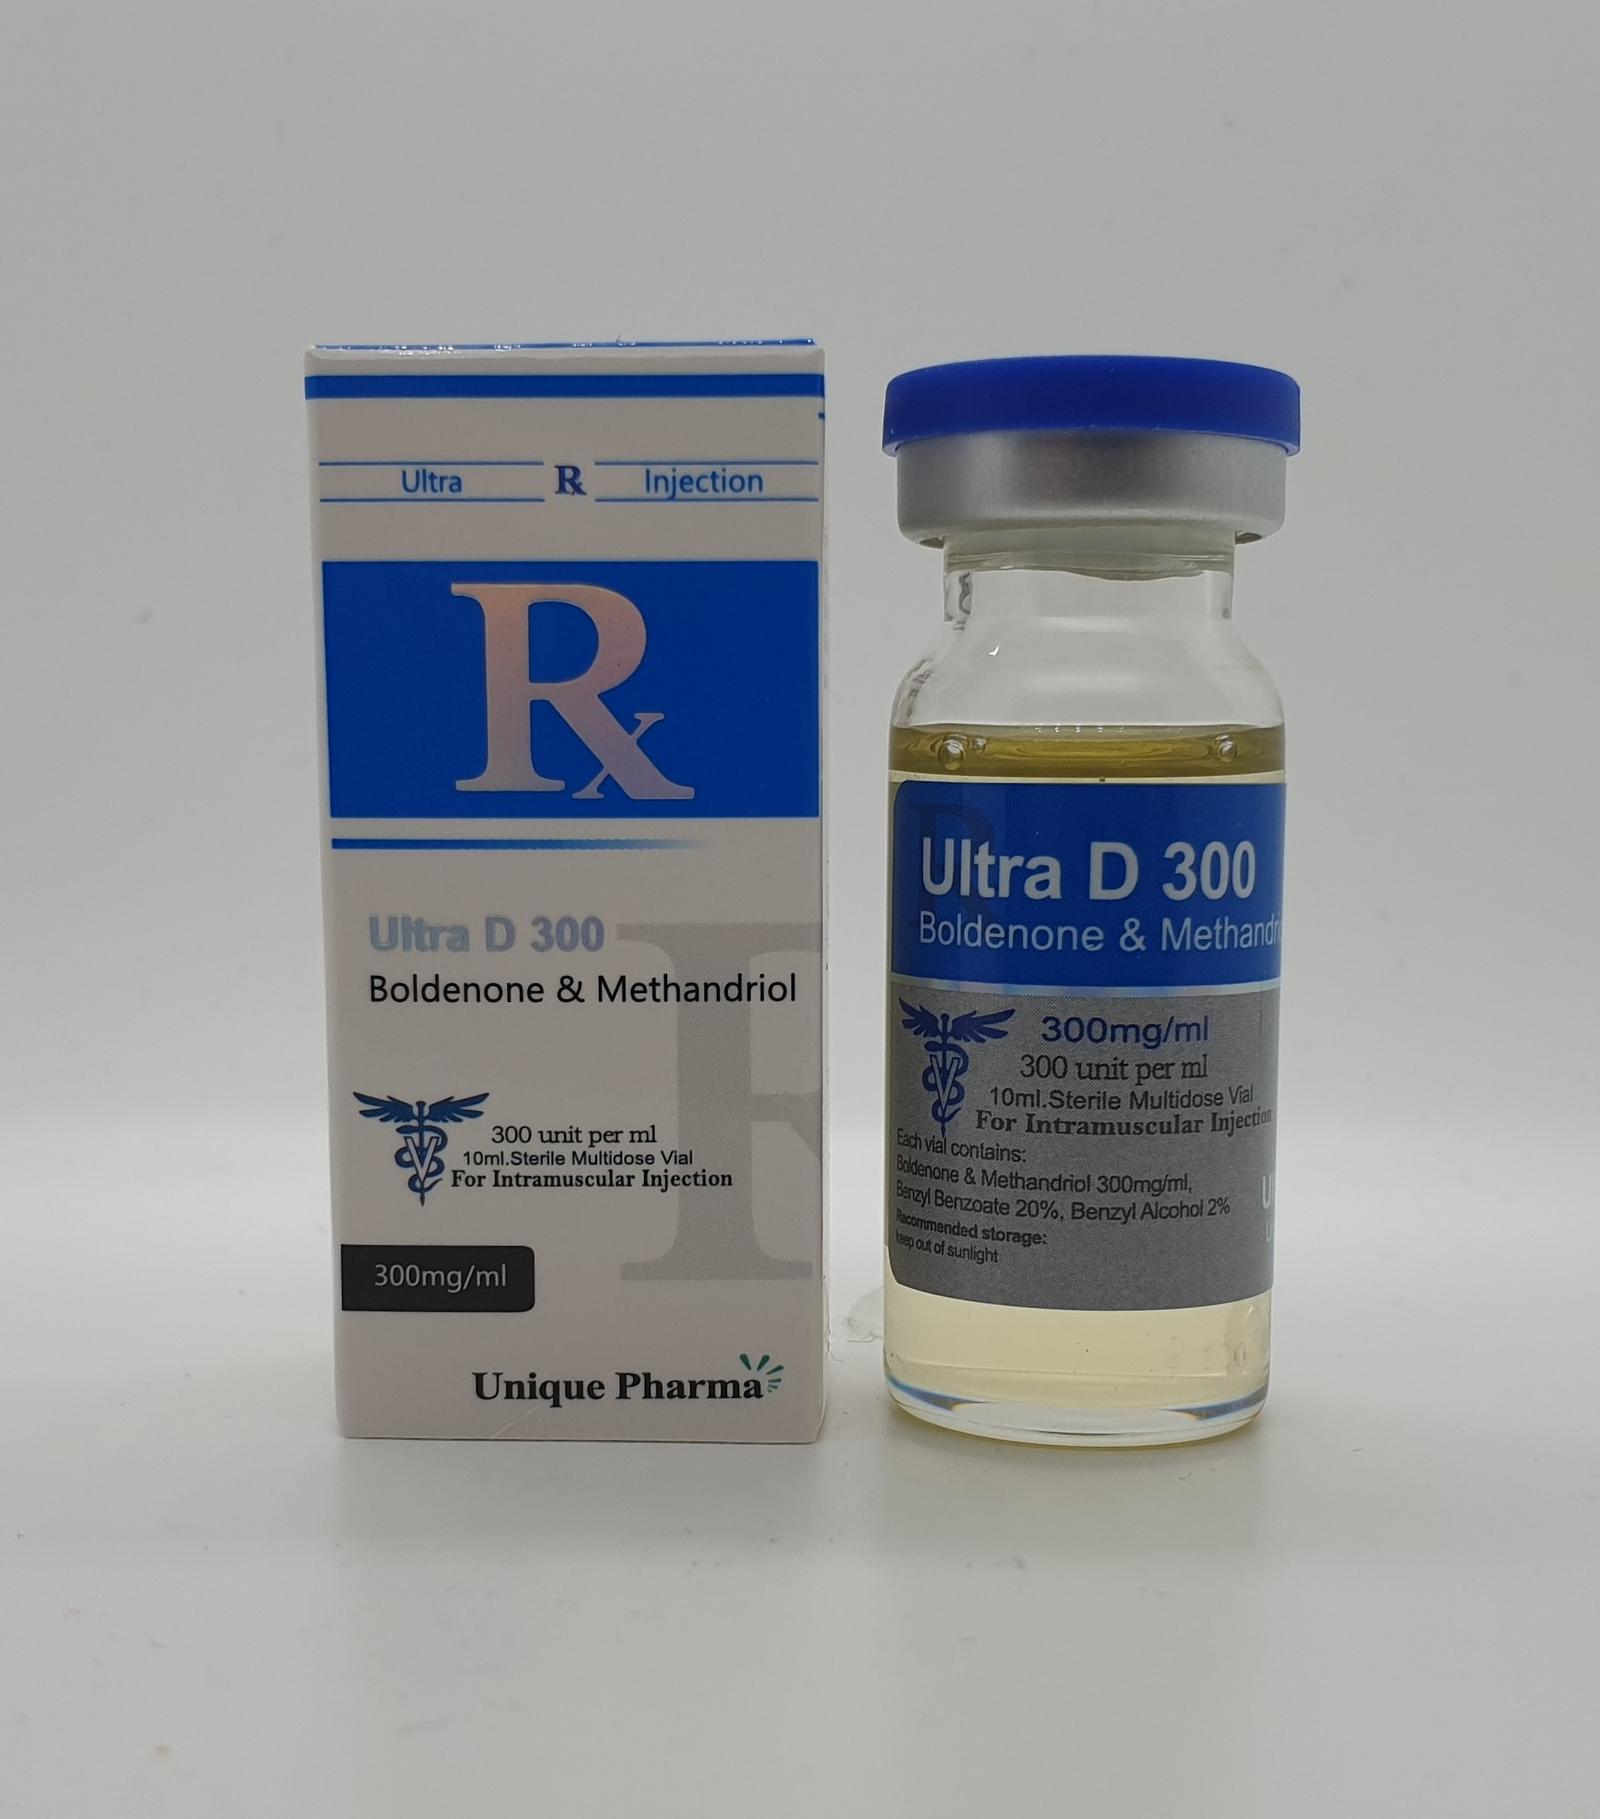 Ultradrive (Boldenone and Methandriol) 300 by UNIQUE PHARMA® kopen